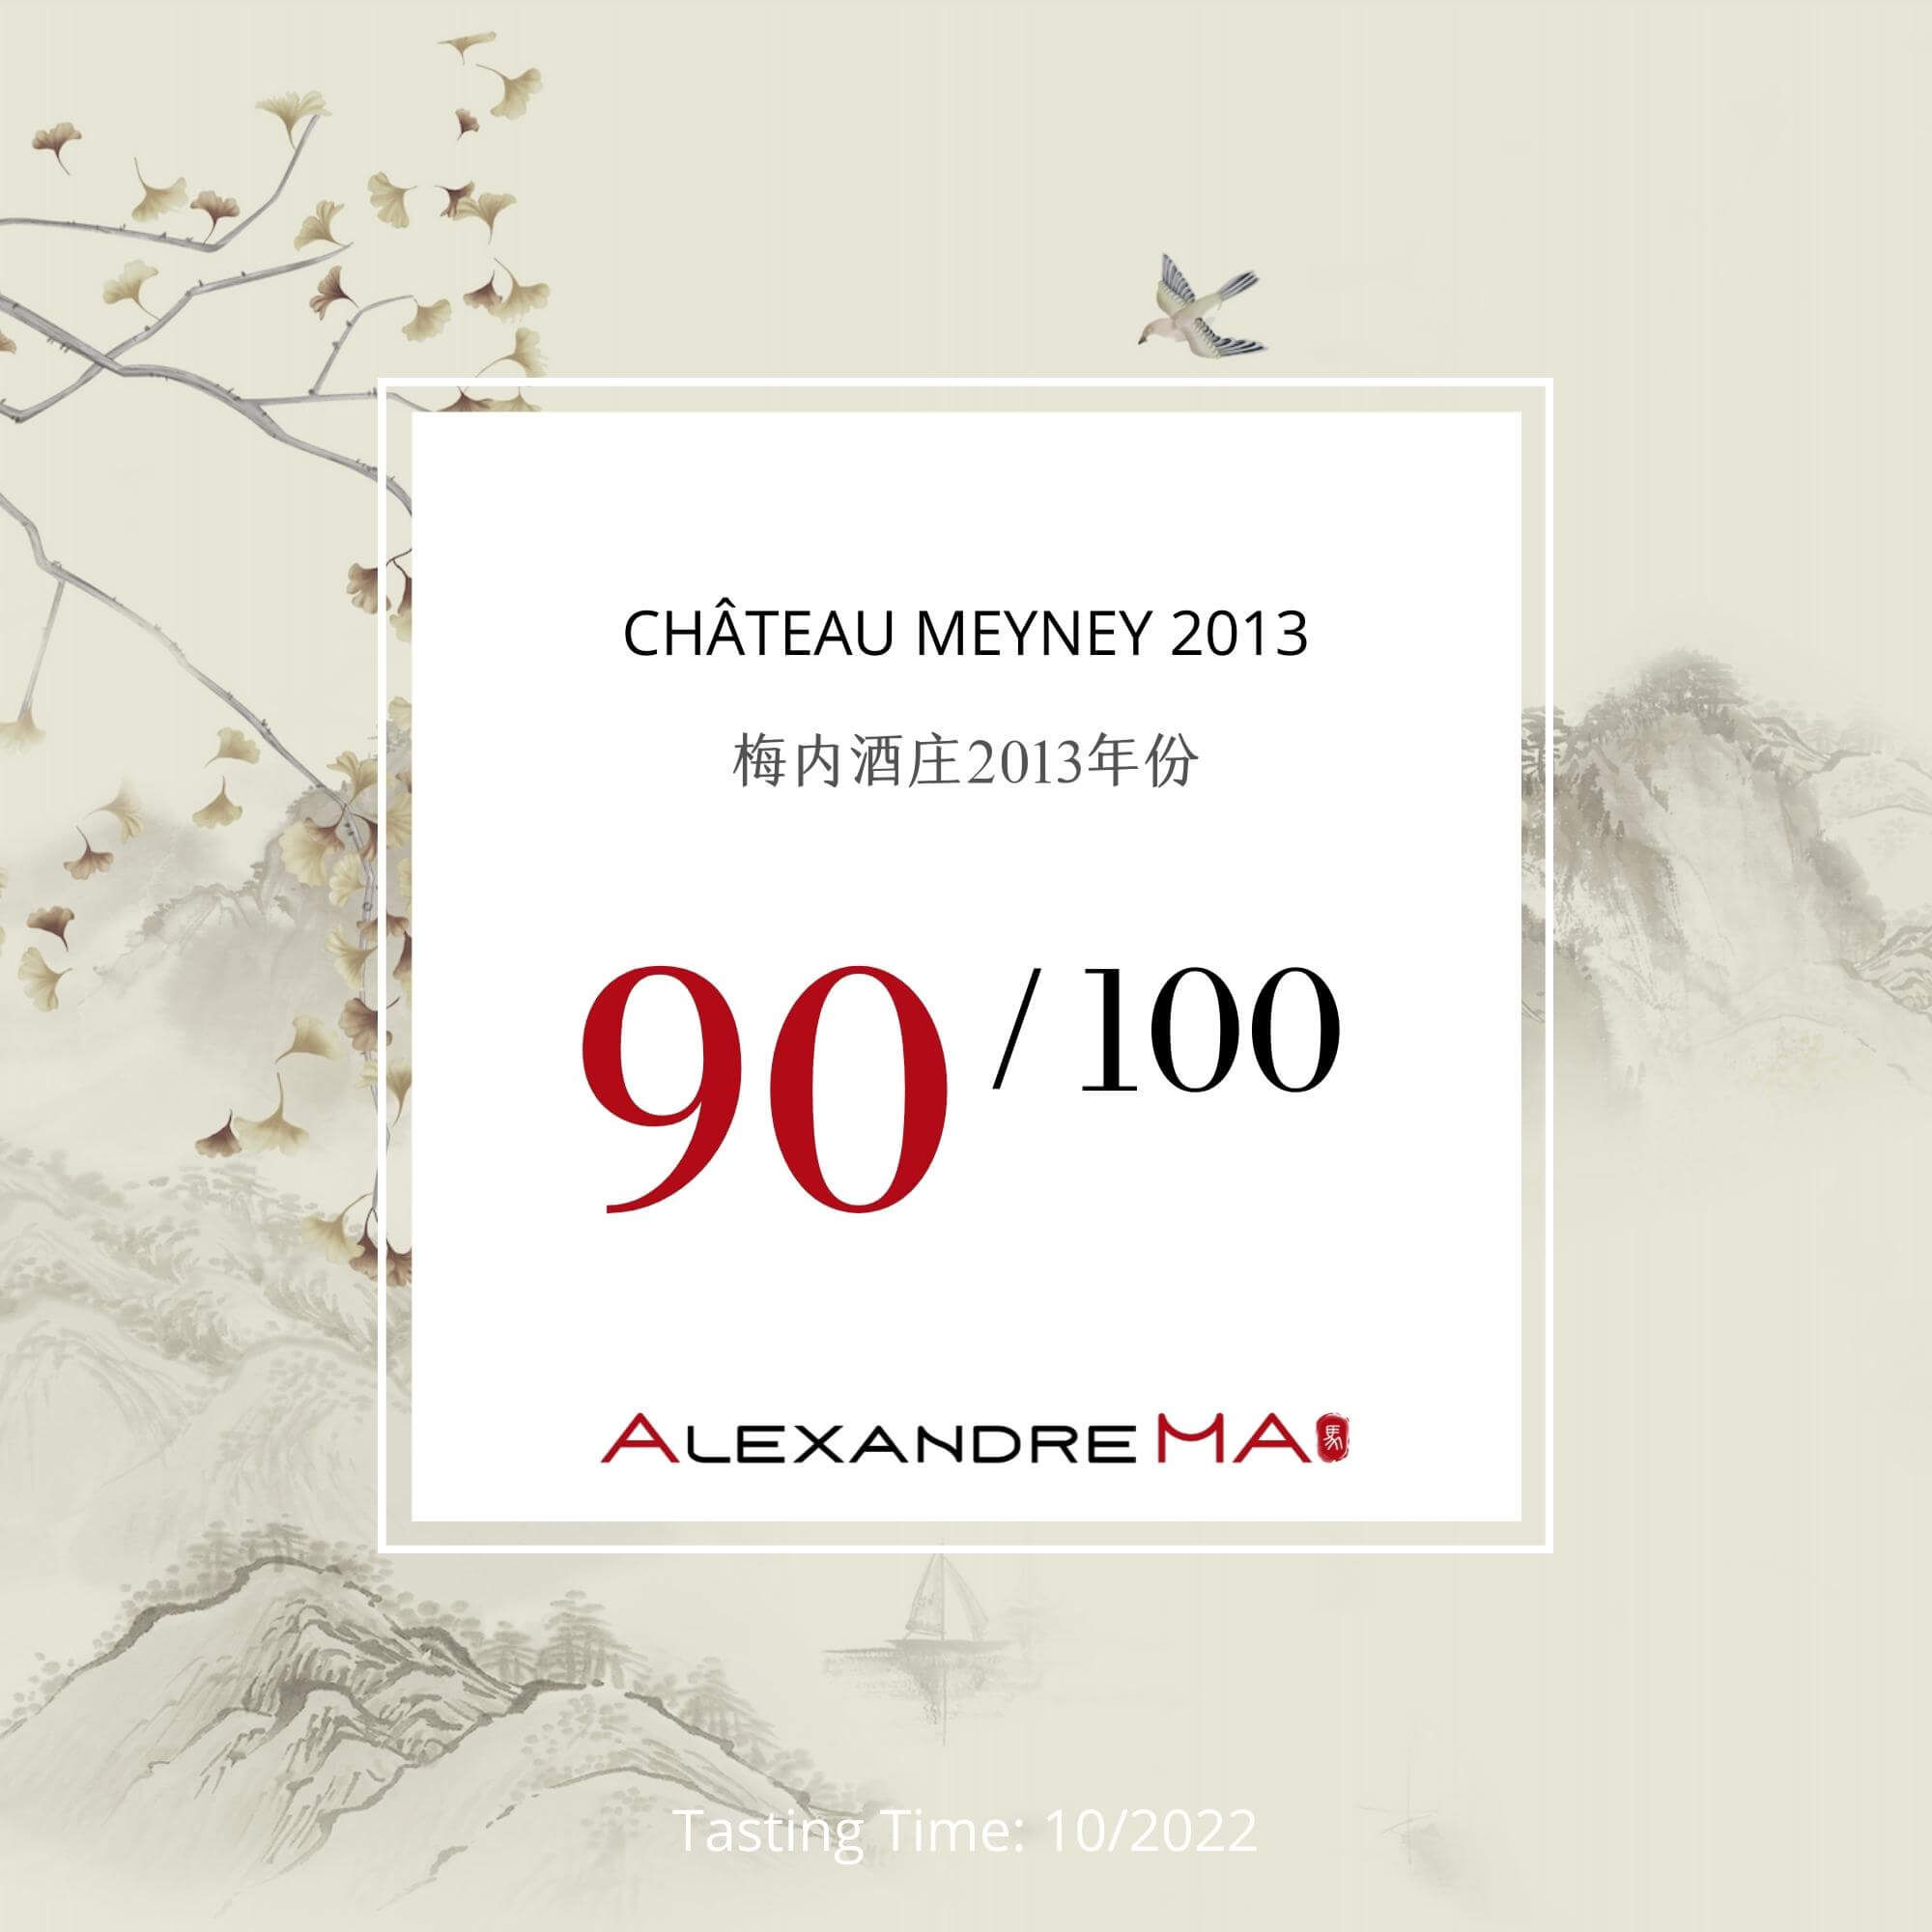 Château Meyney 2013 - Alexandre MA